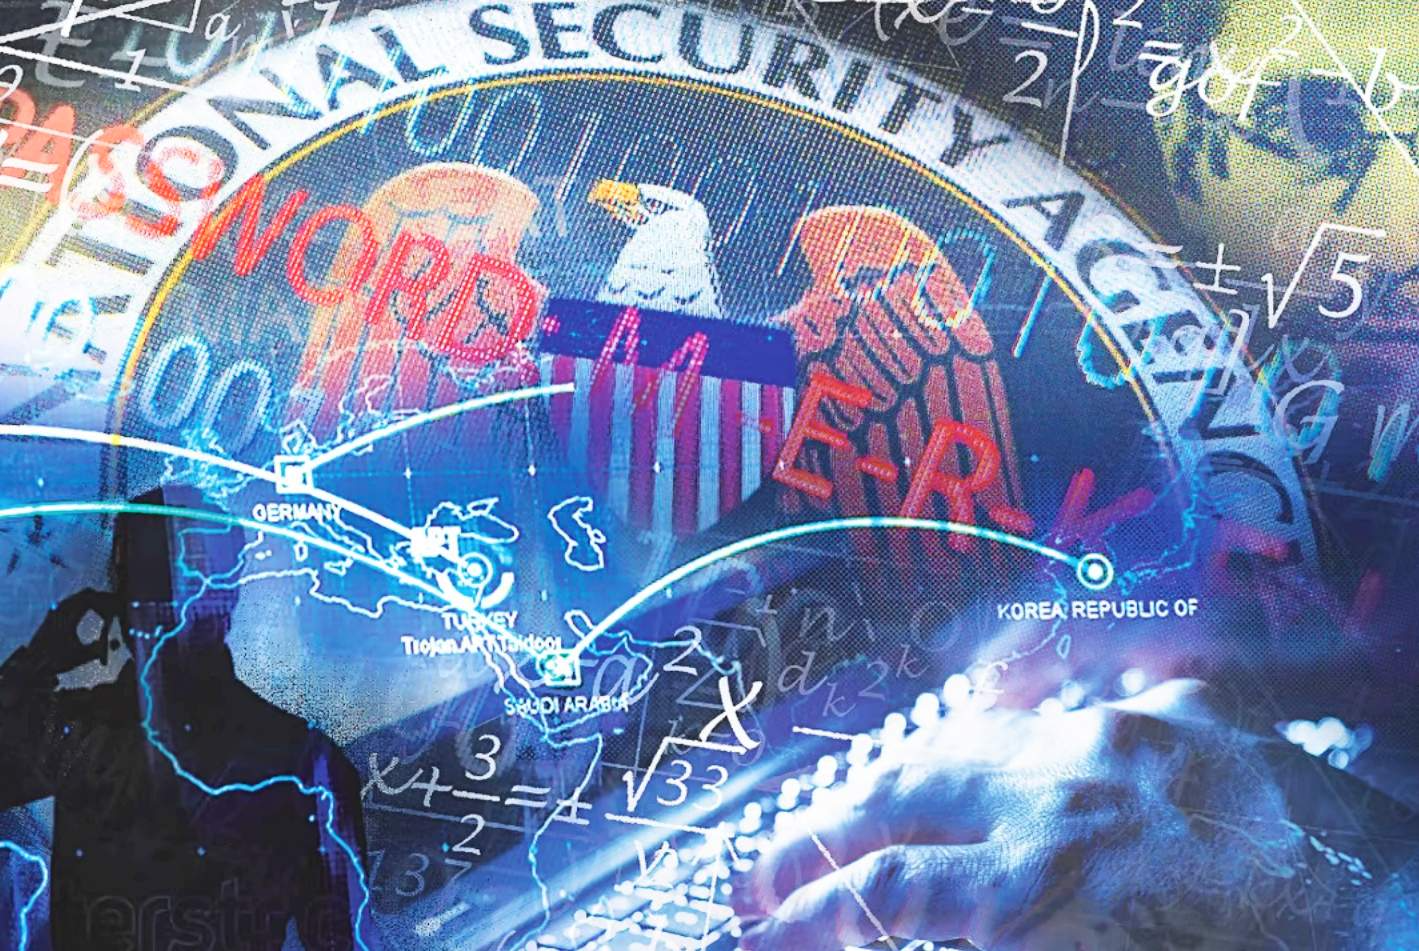 NSA Artistic montage